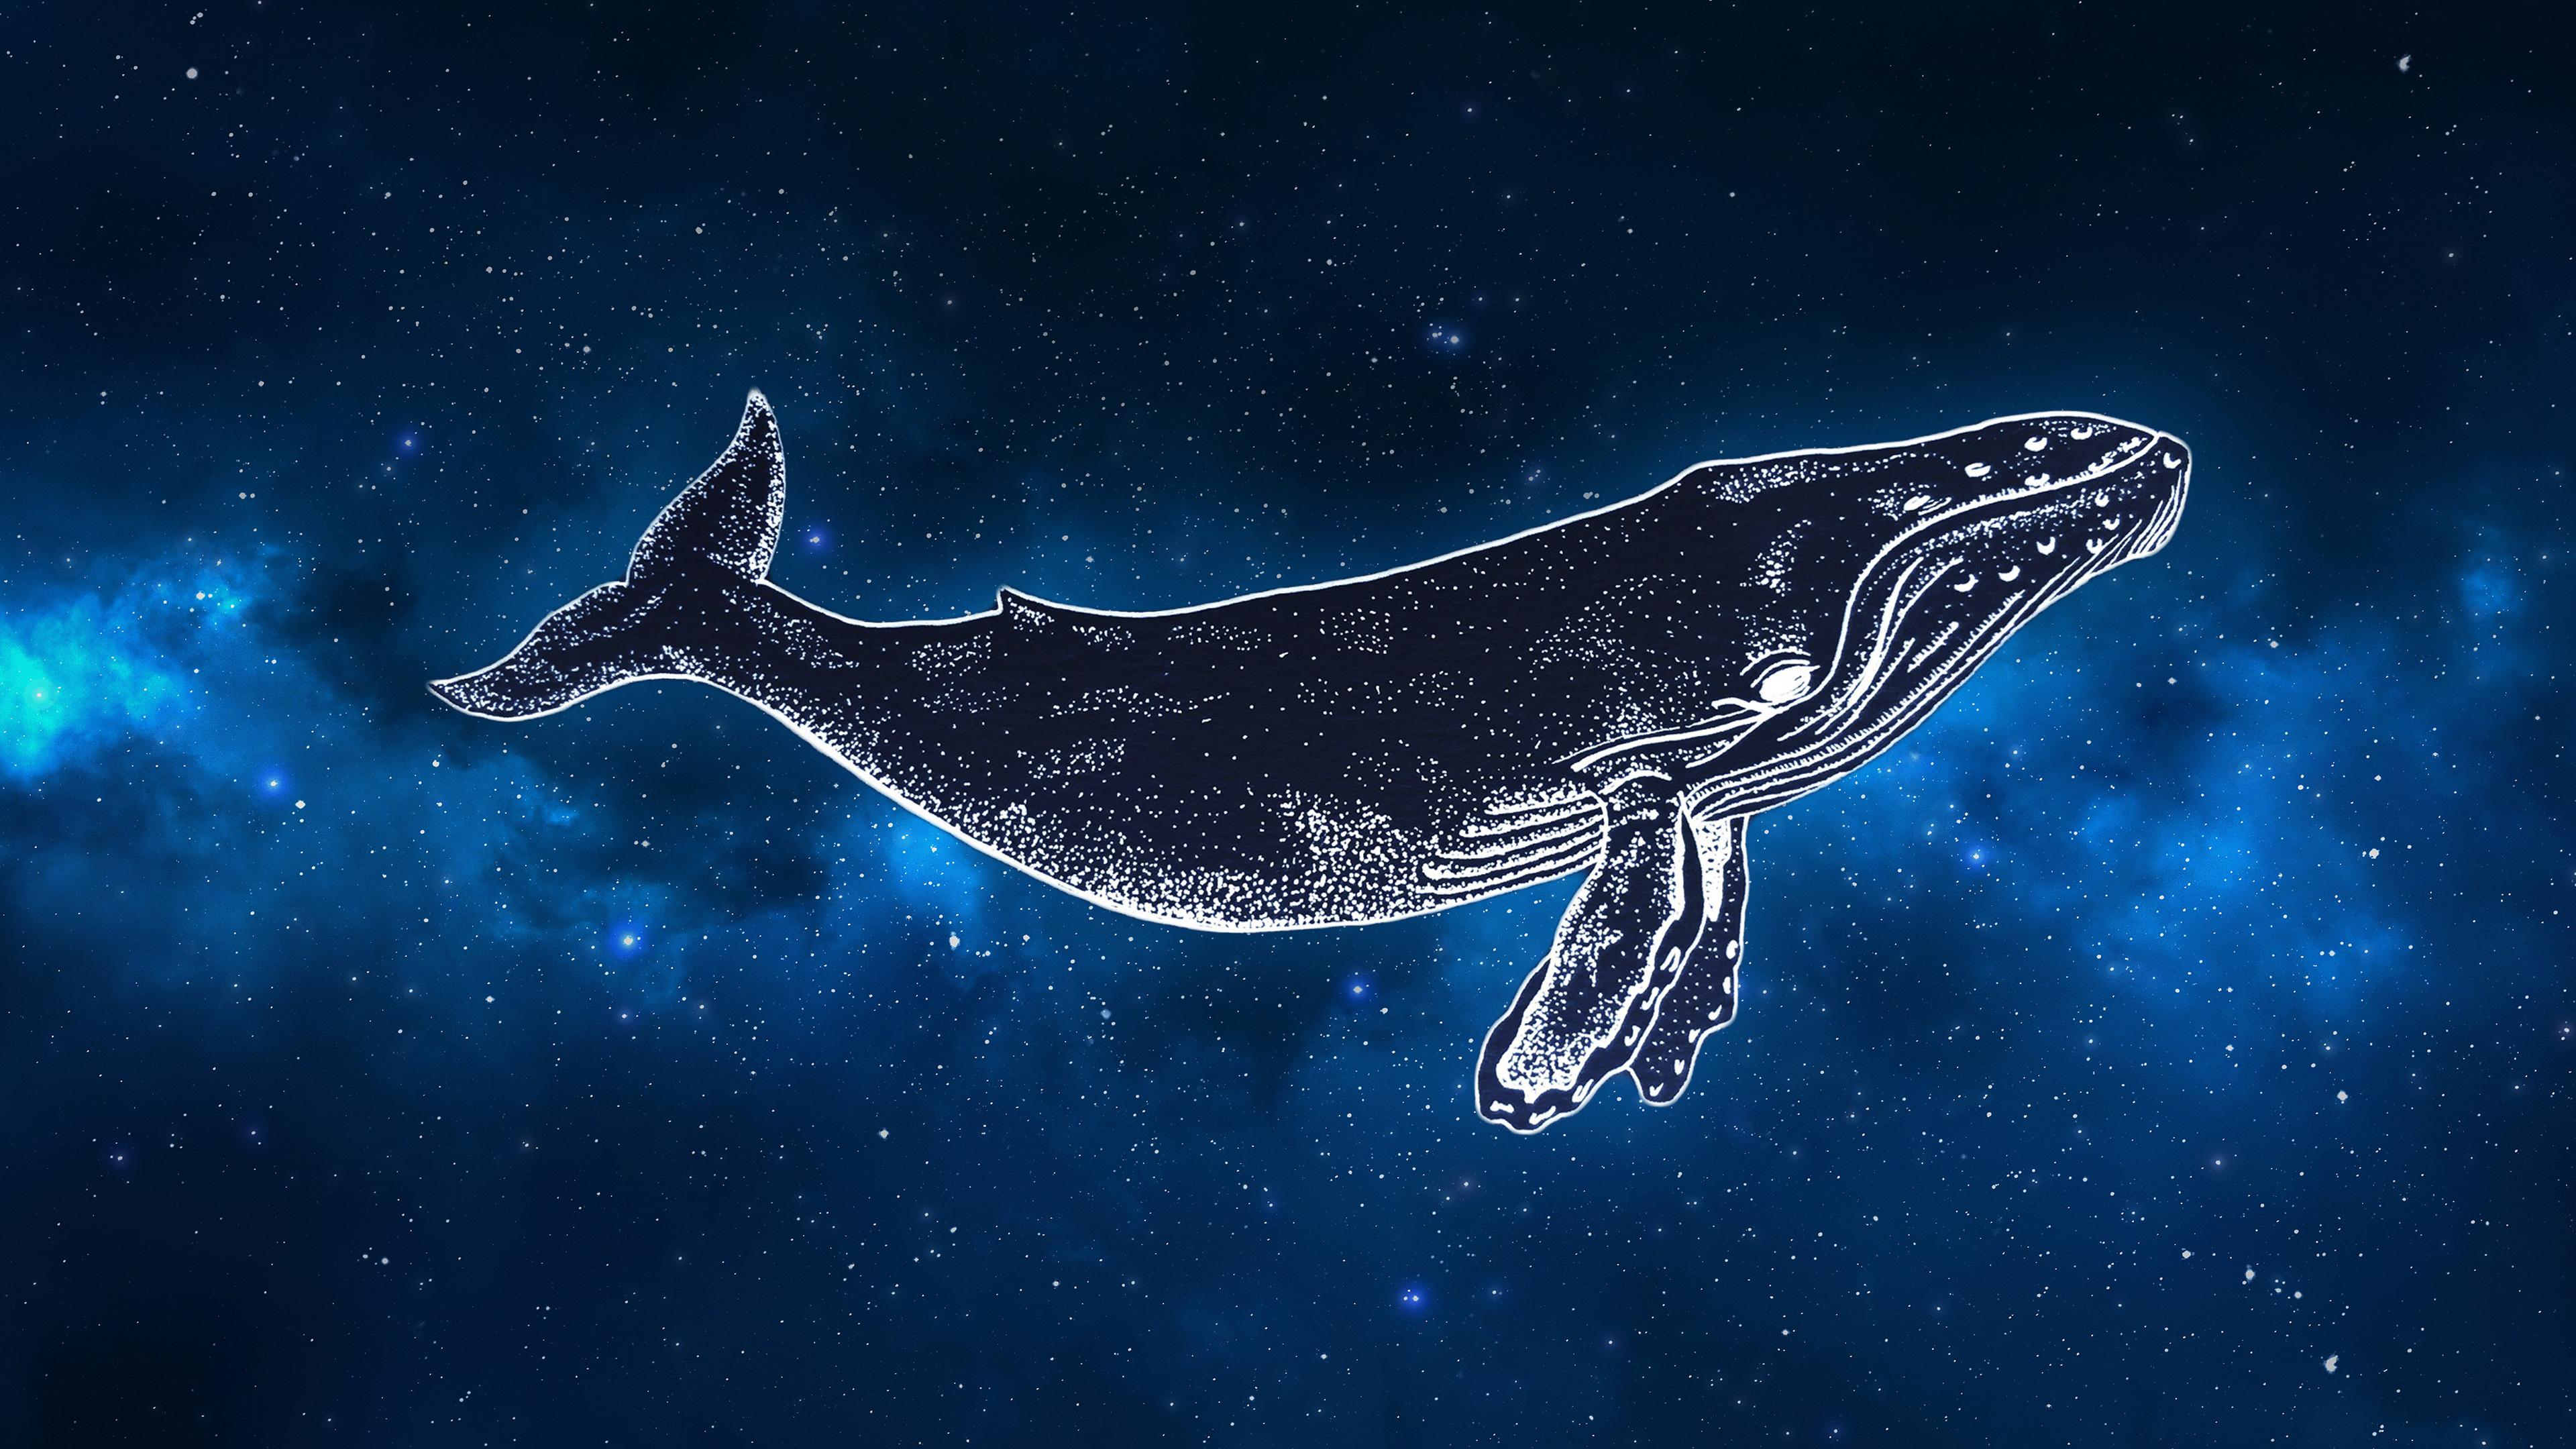 OC space whale (3480 x 2160)